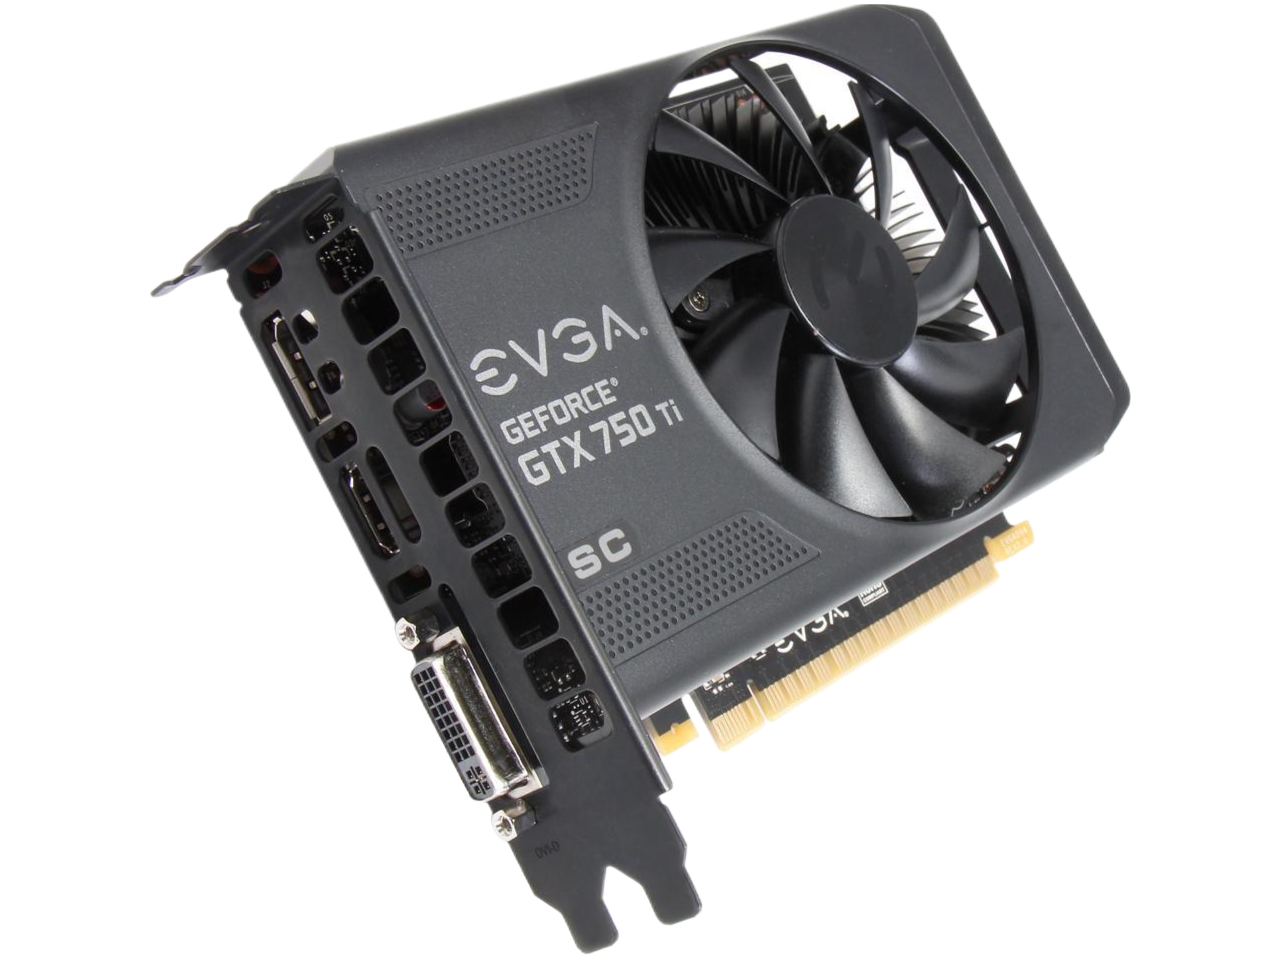 EVGA GeForce GTX 750 Ti Superclocked 2GB 128-Bit GDDR5 G-SYNC Support PCI Express 3.0 Video Card 02G-P4-3753-KR